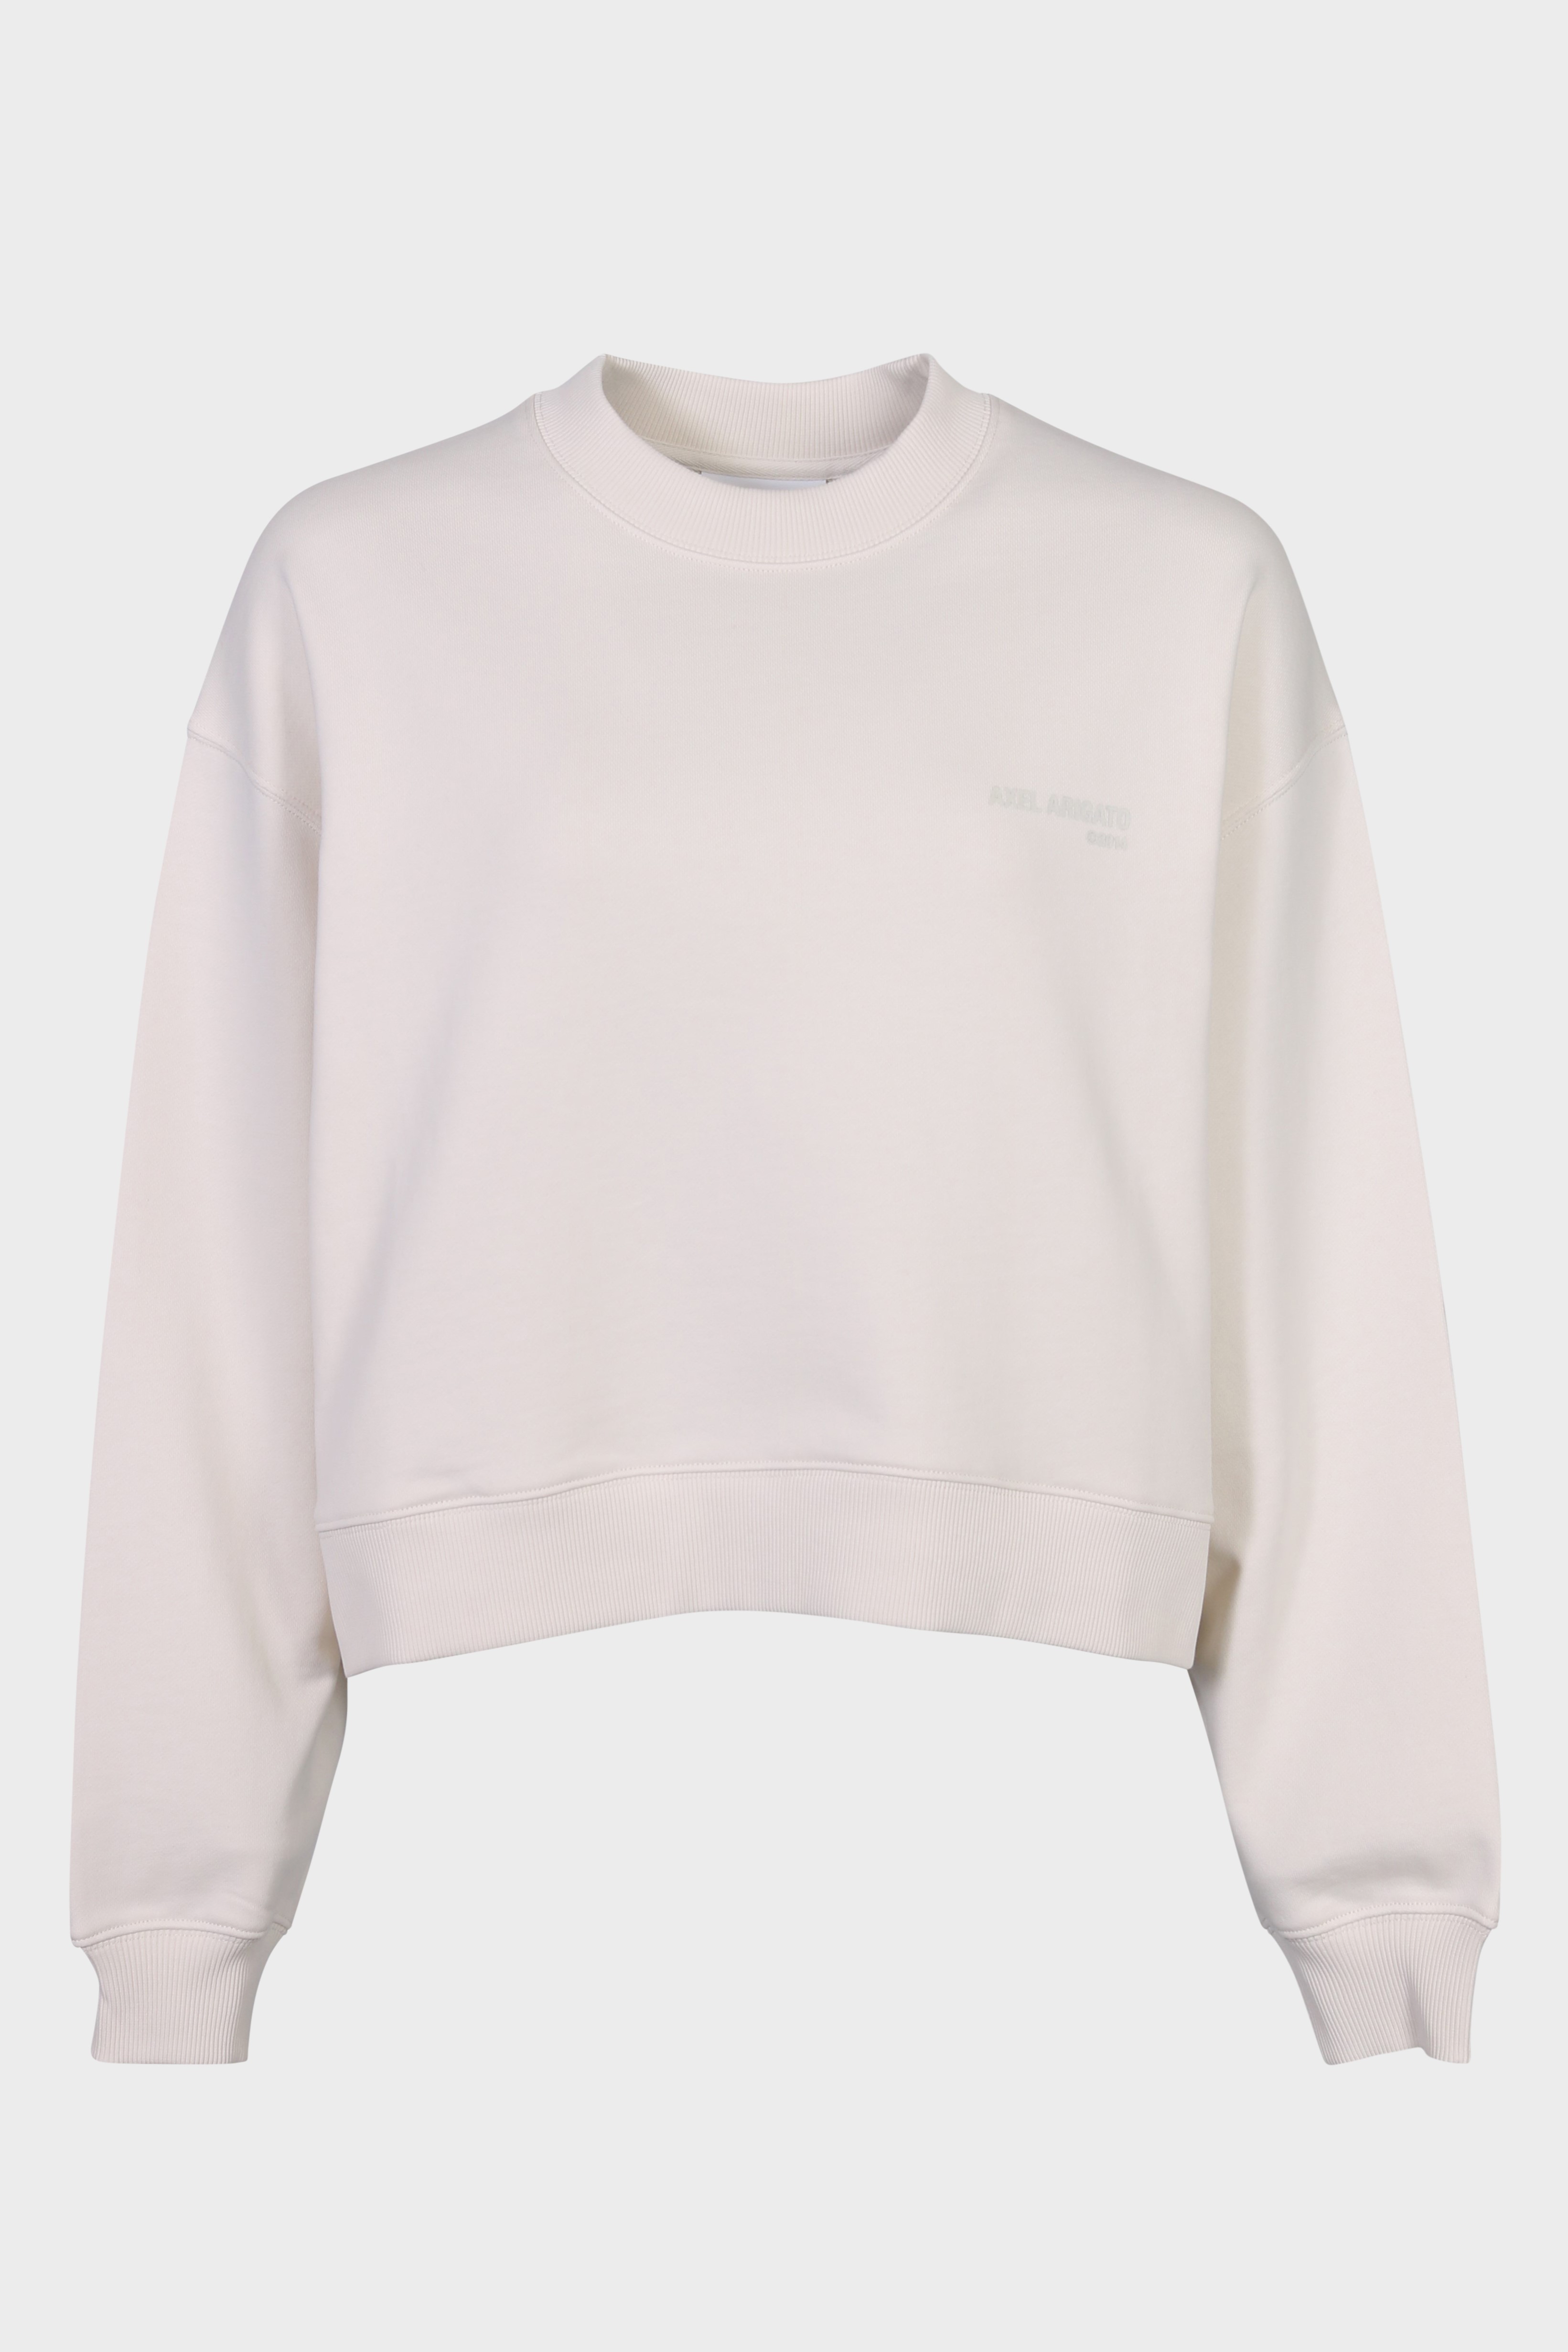 AXEL ARIGATO Legacy Sweatshirt in Off White